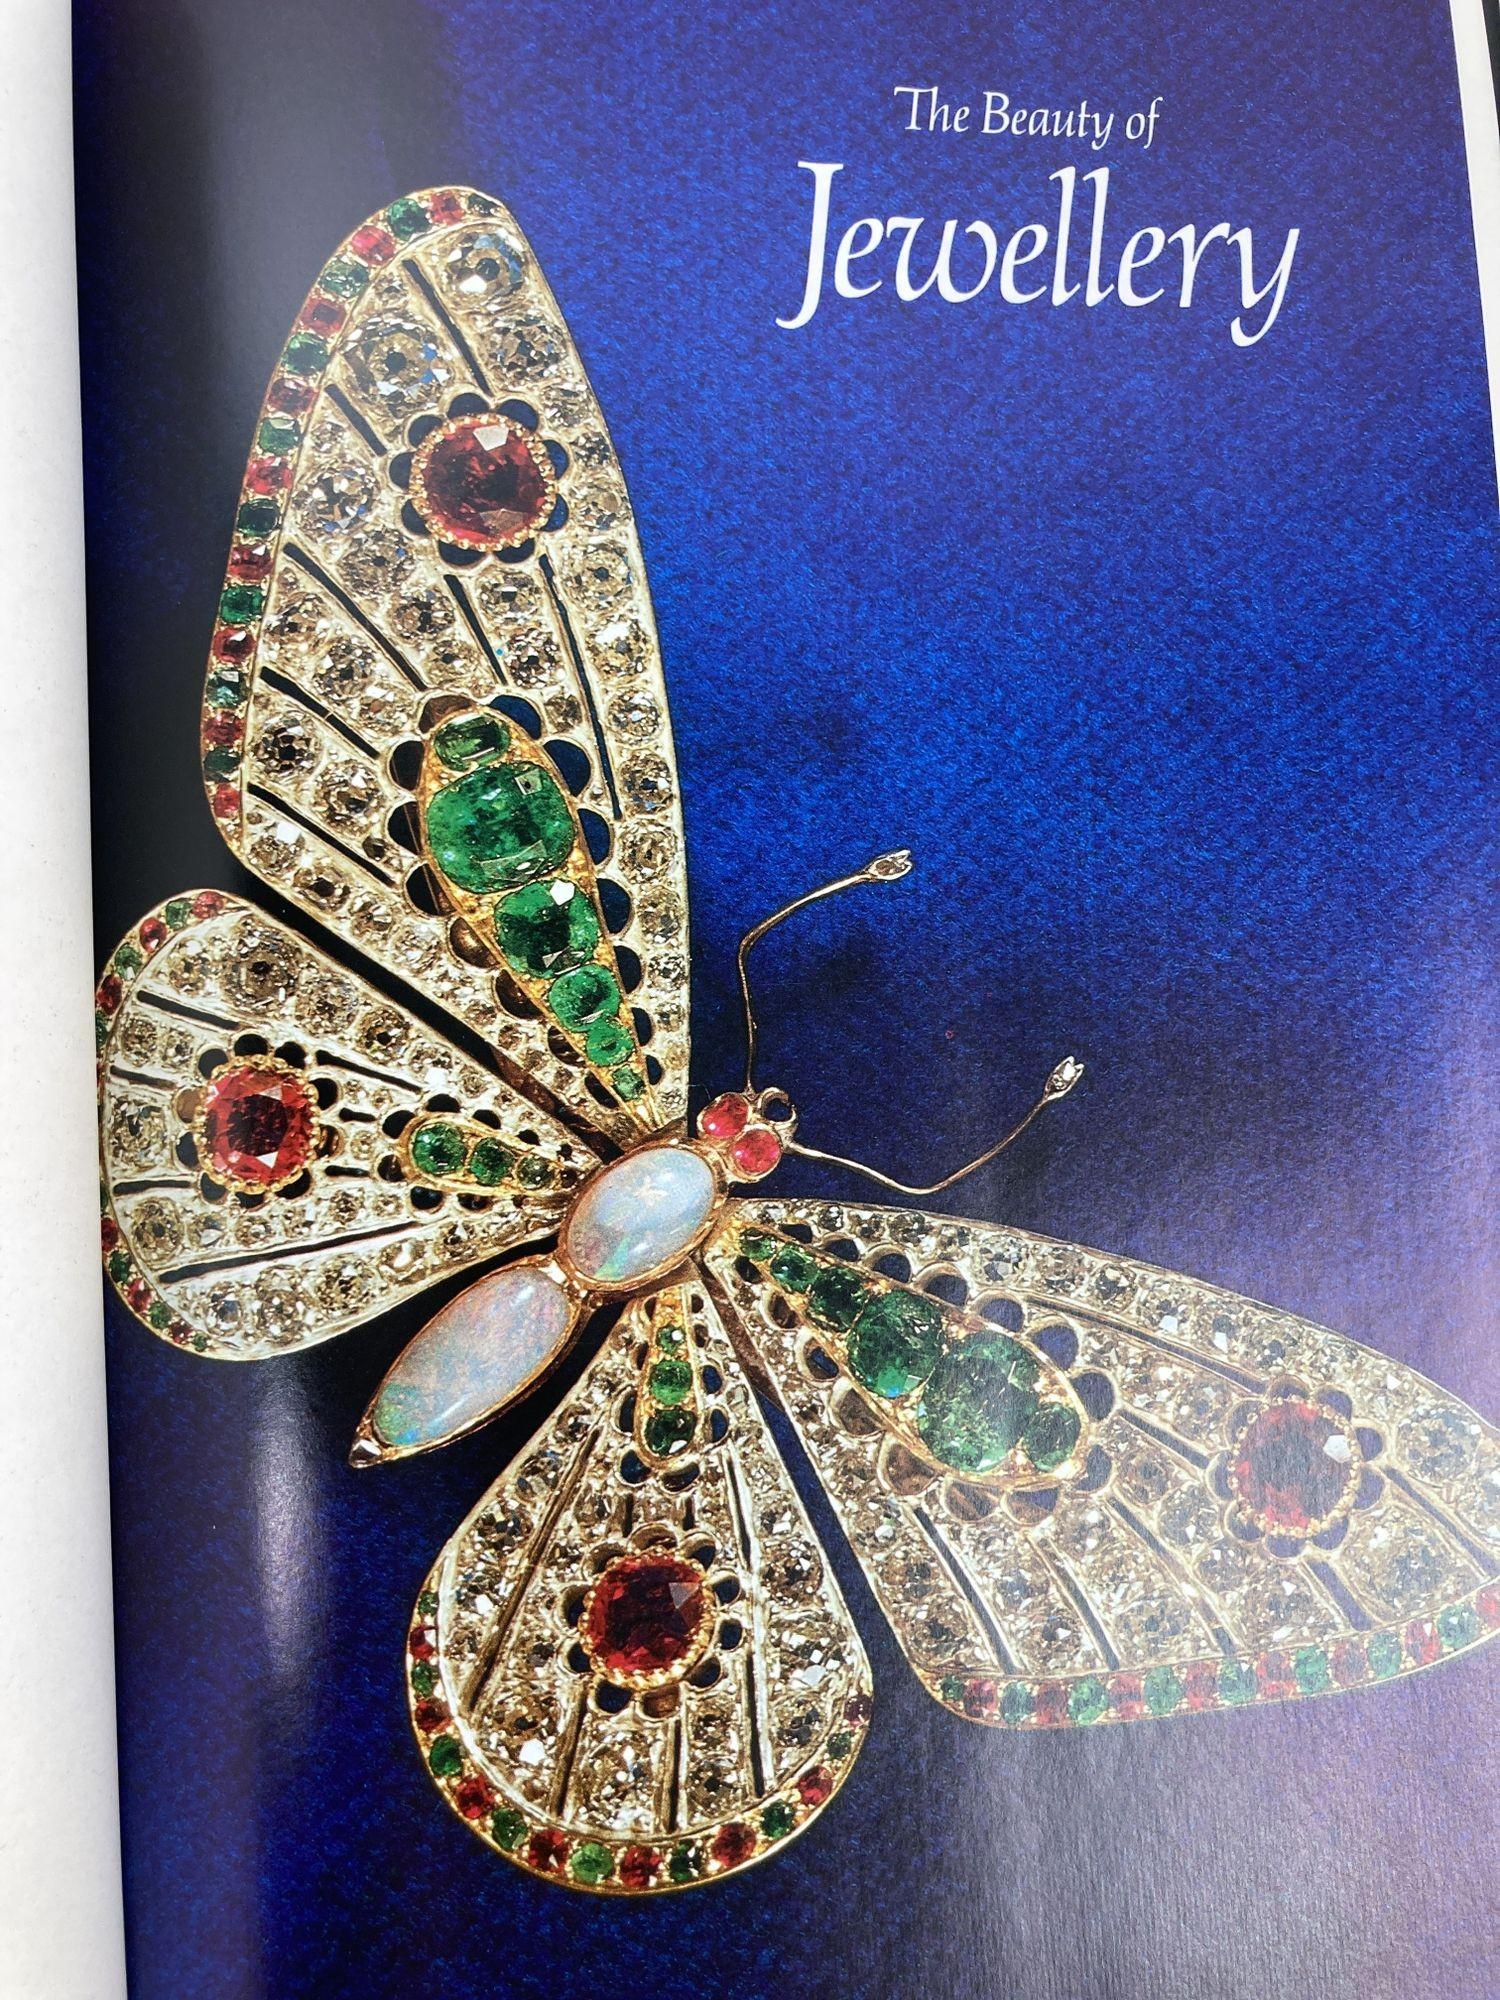 1979 The Beauty of Jewelry, Buch von Joan Frank (Papier) im Angebot